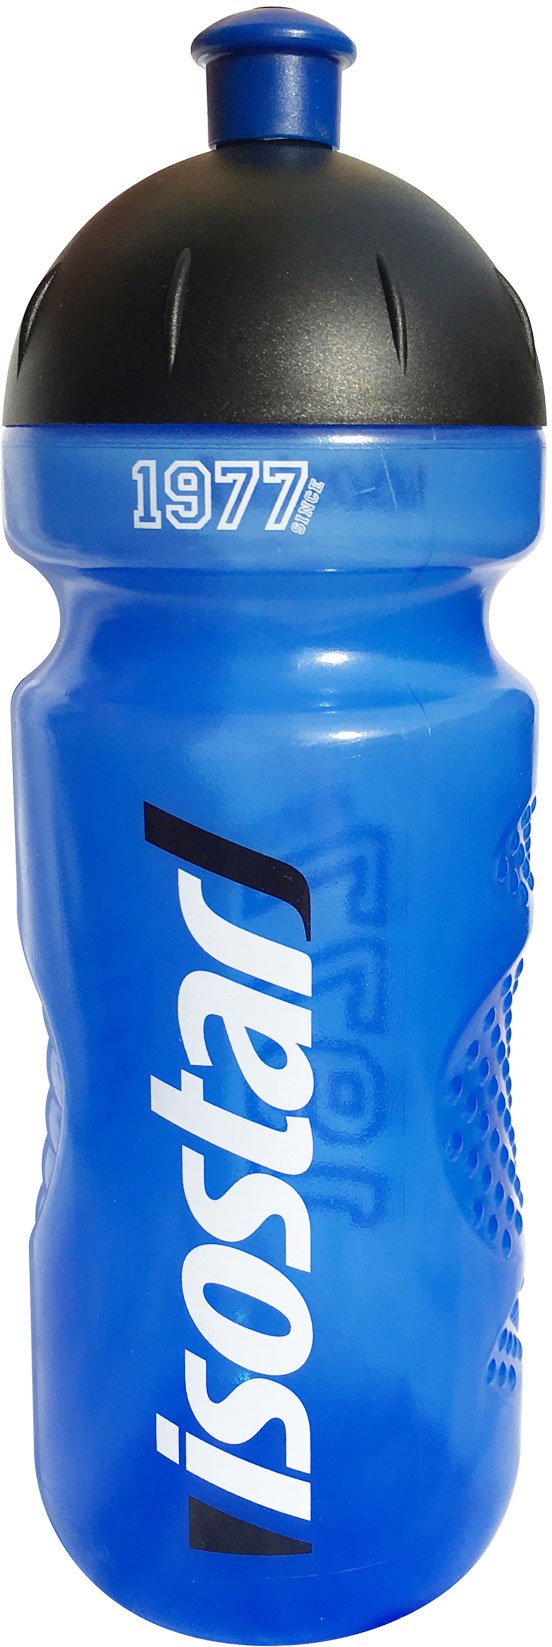 Bottle ISOSTAR 650ml BIDON